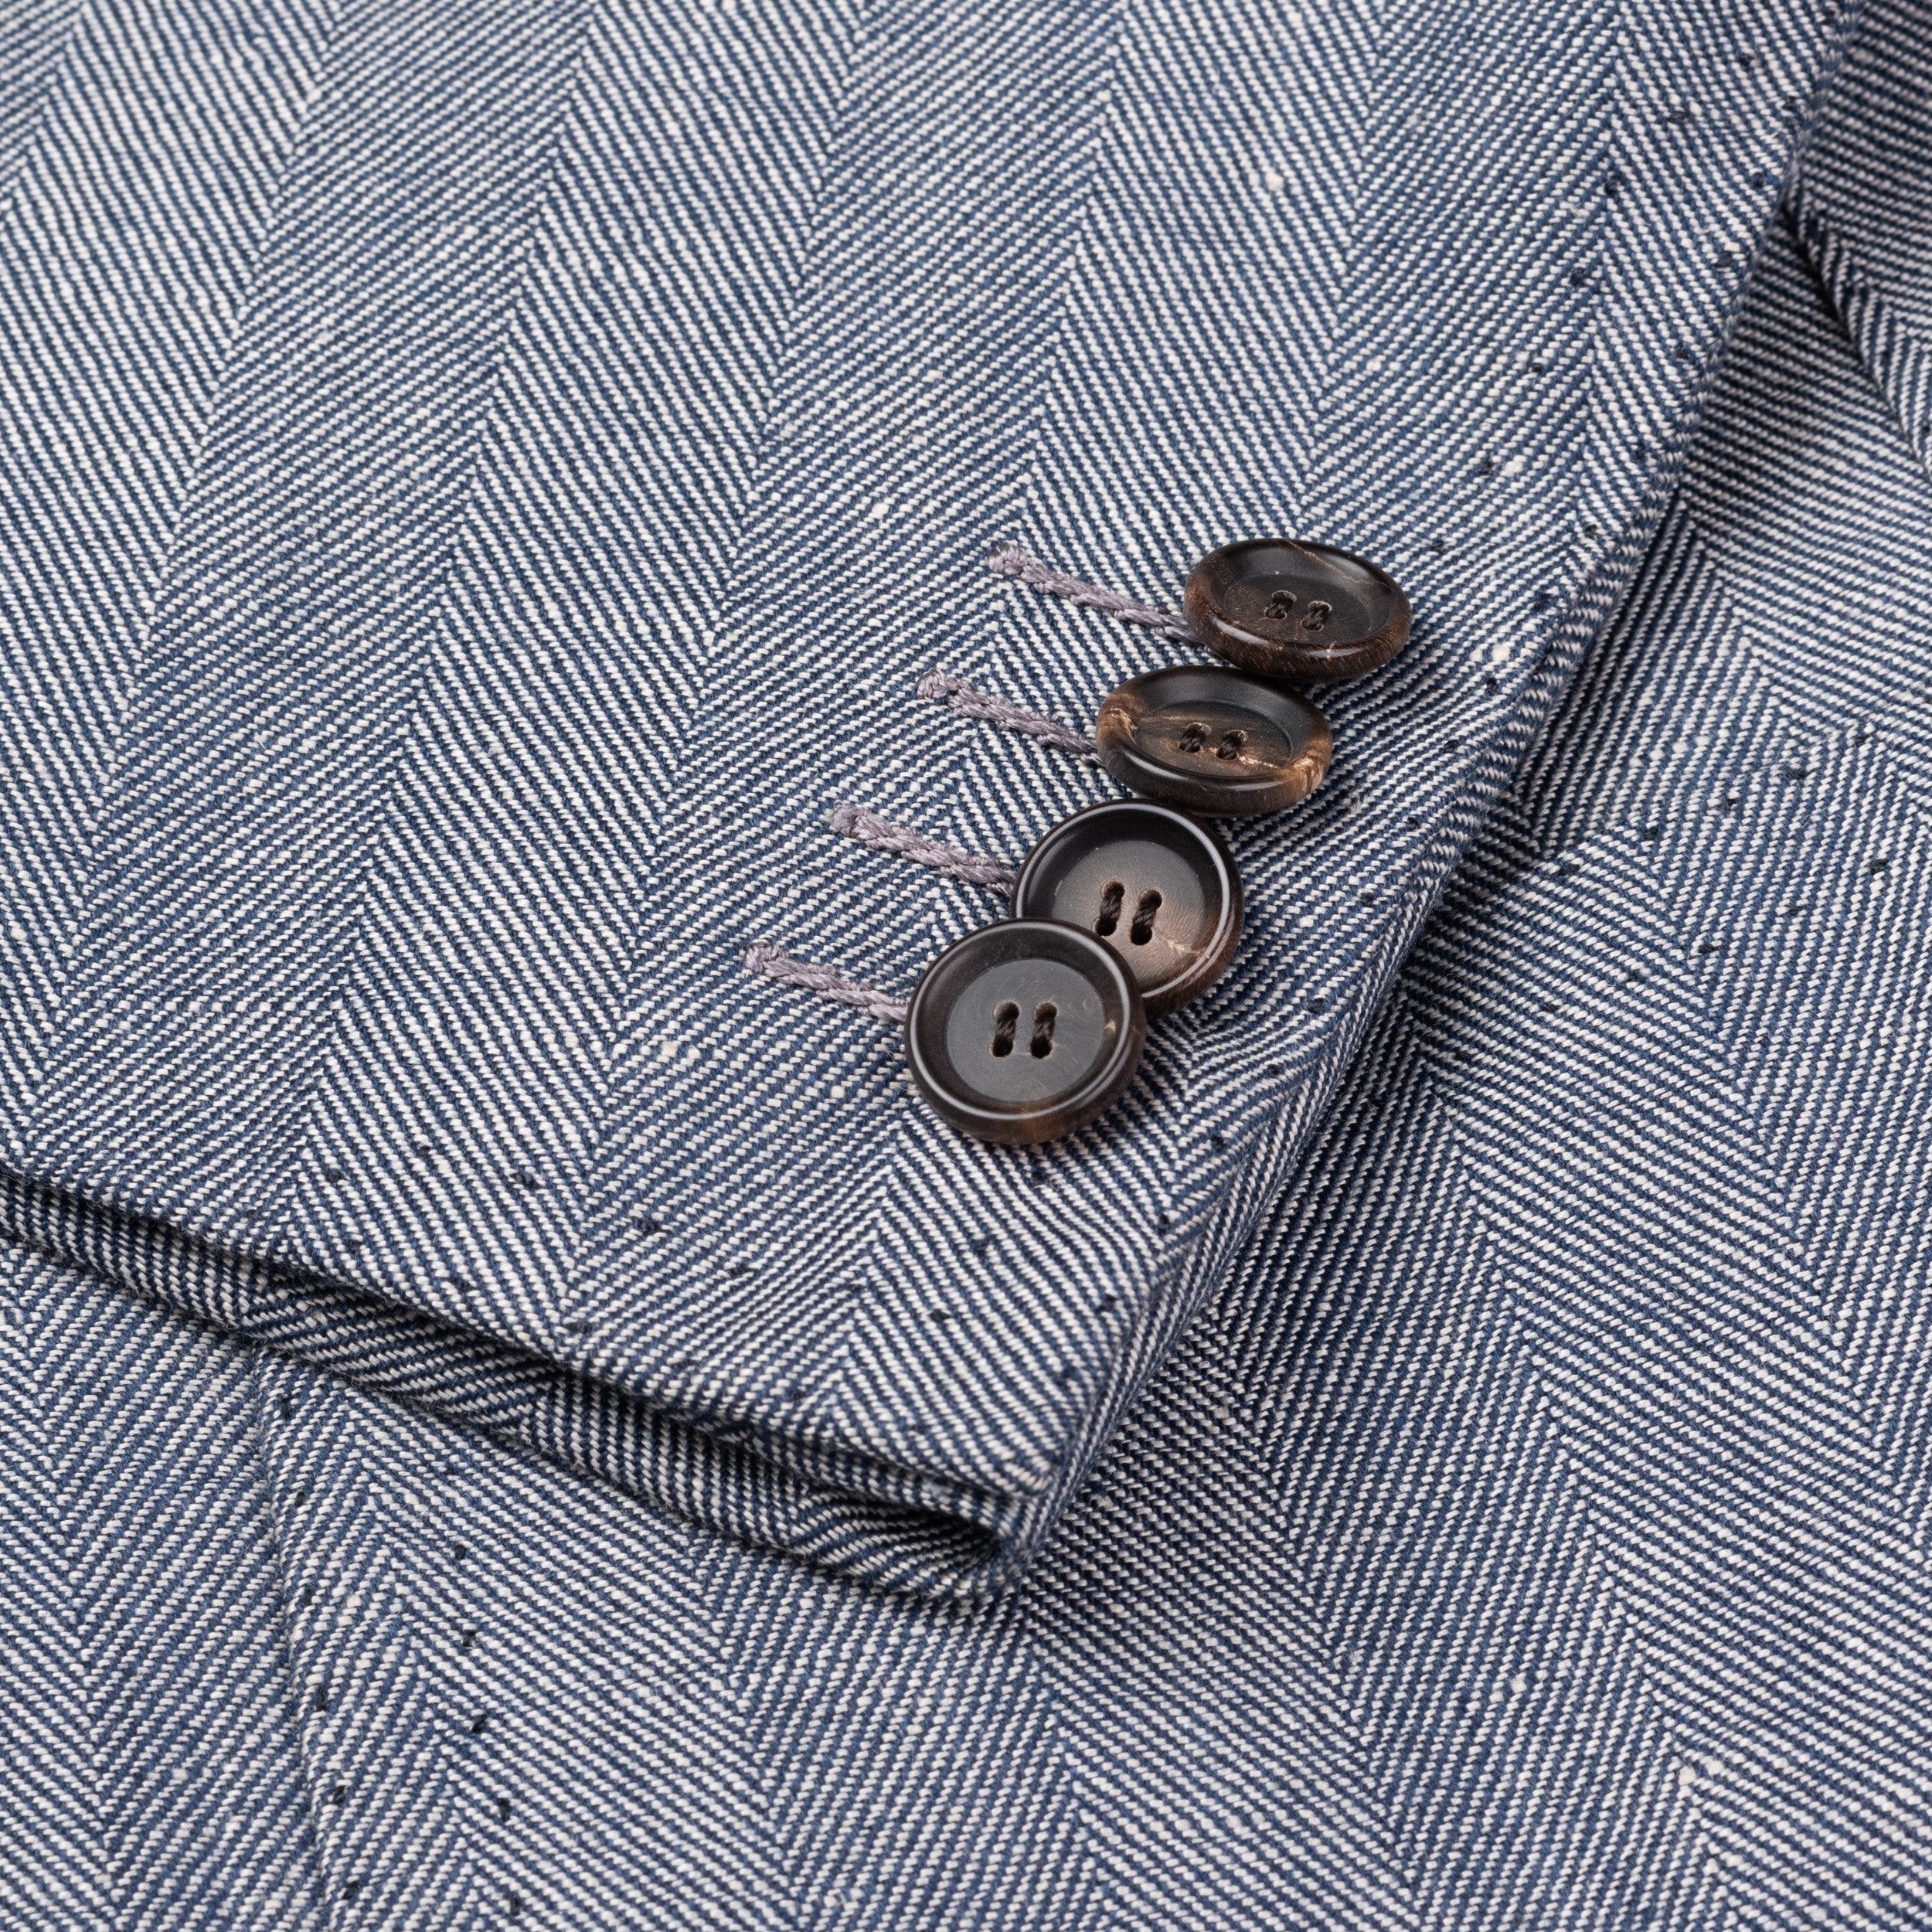 CESARE ATTOLINI Blue Gray Herringbone Wool Linen Unlined Blazer Jacket 50 NEW 40 CESARE ATTOLINI